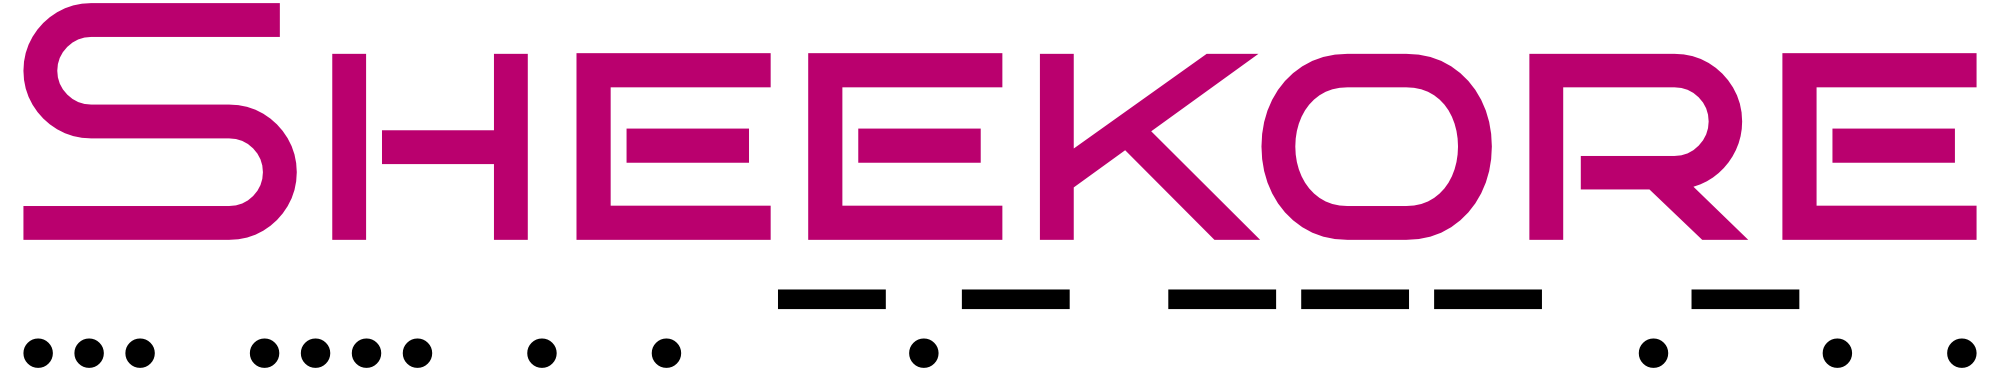 sheekore-brand logo